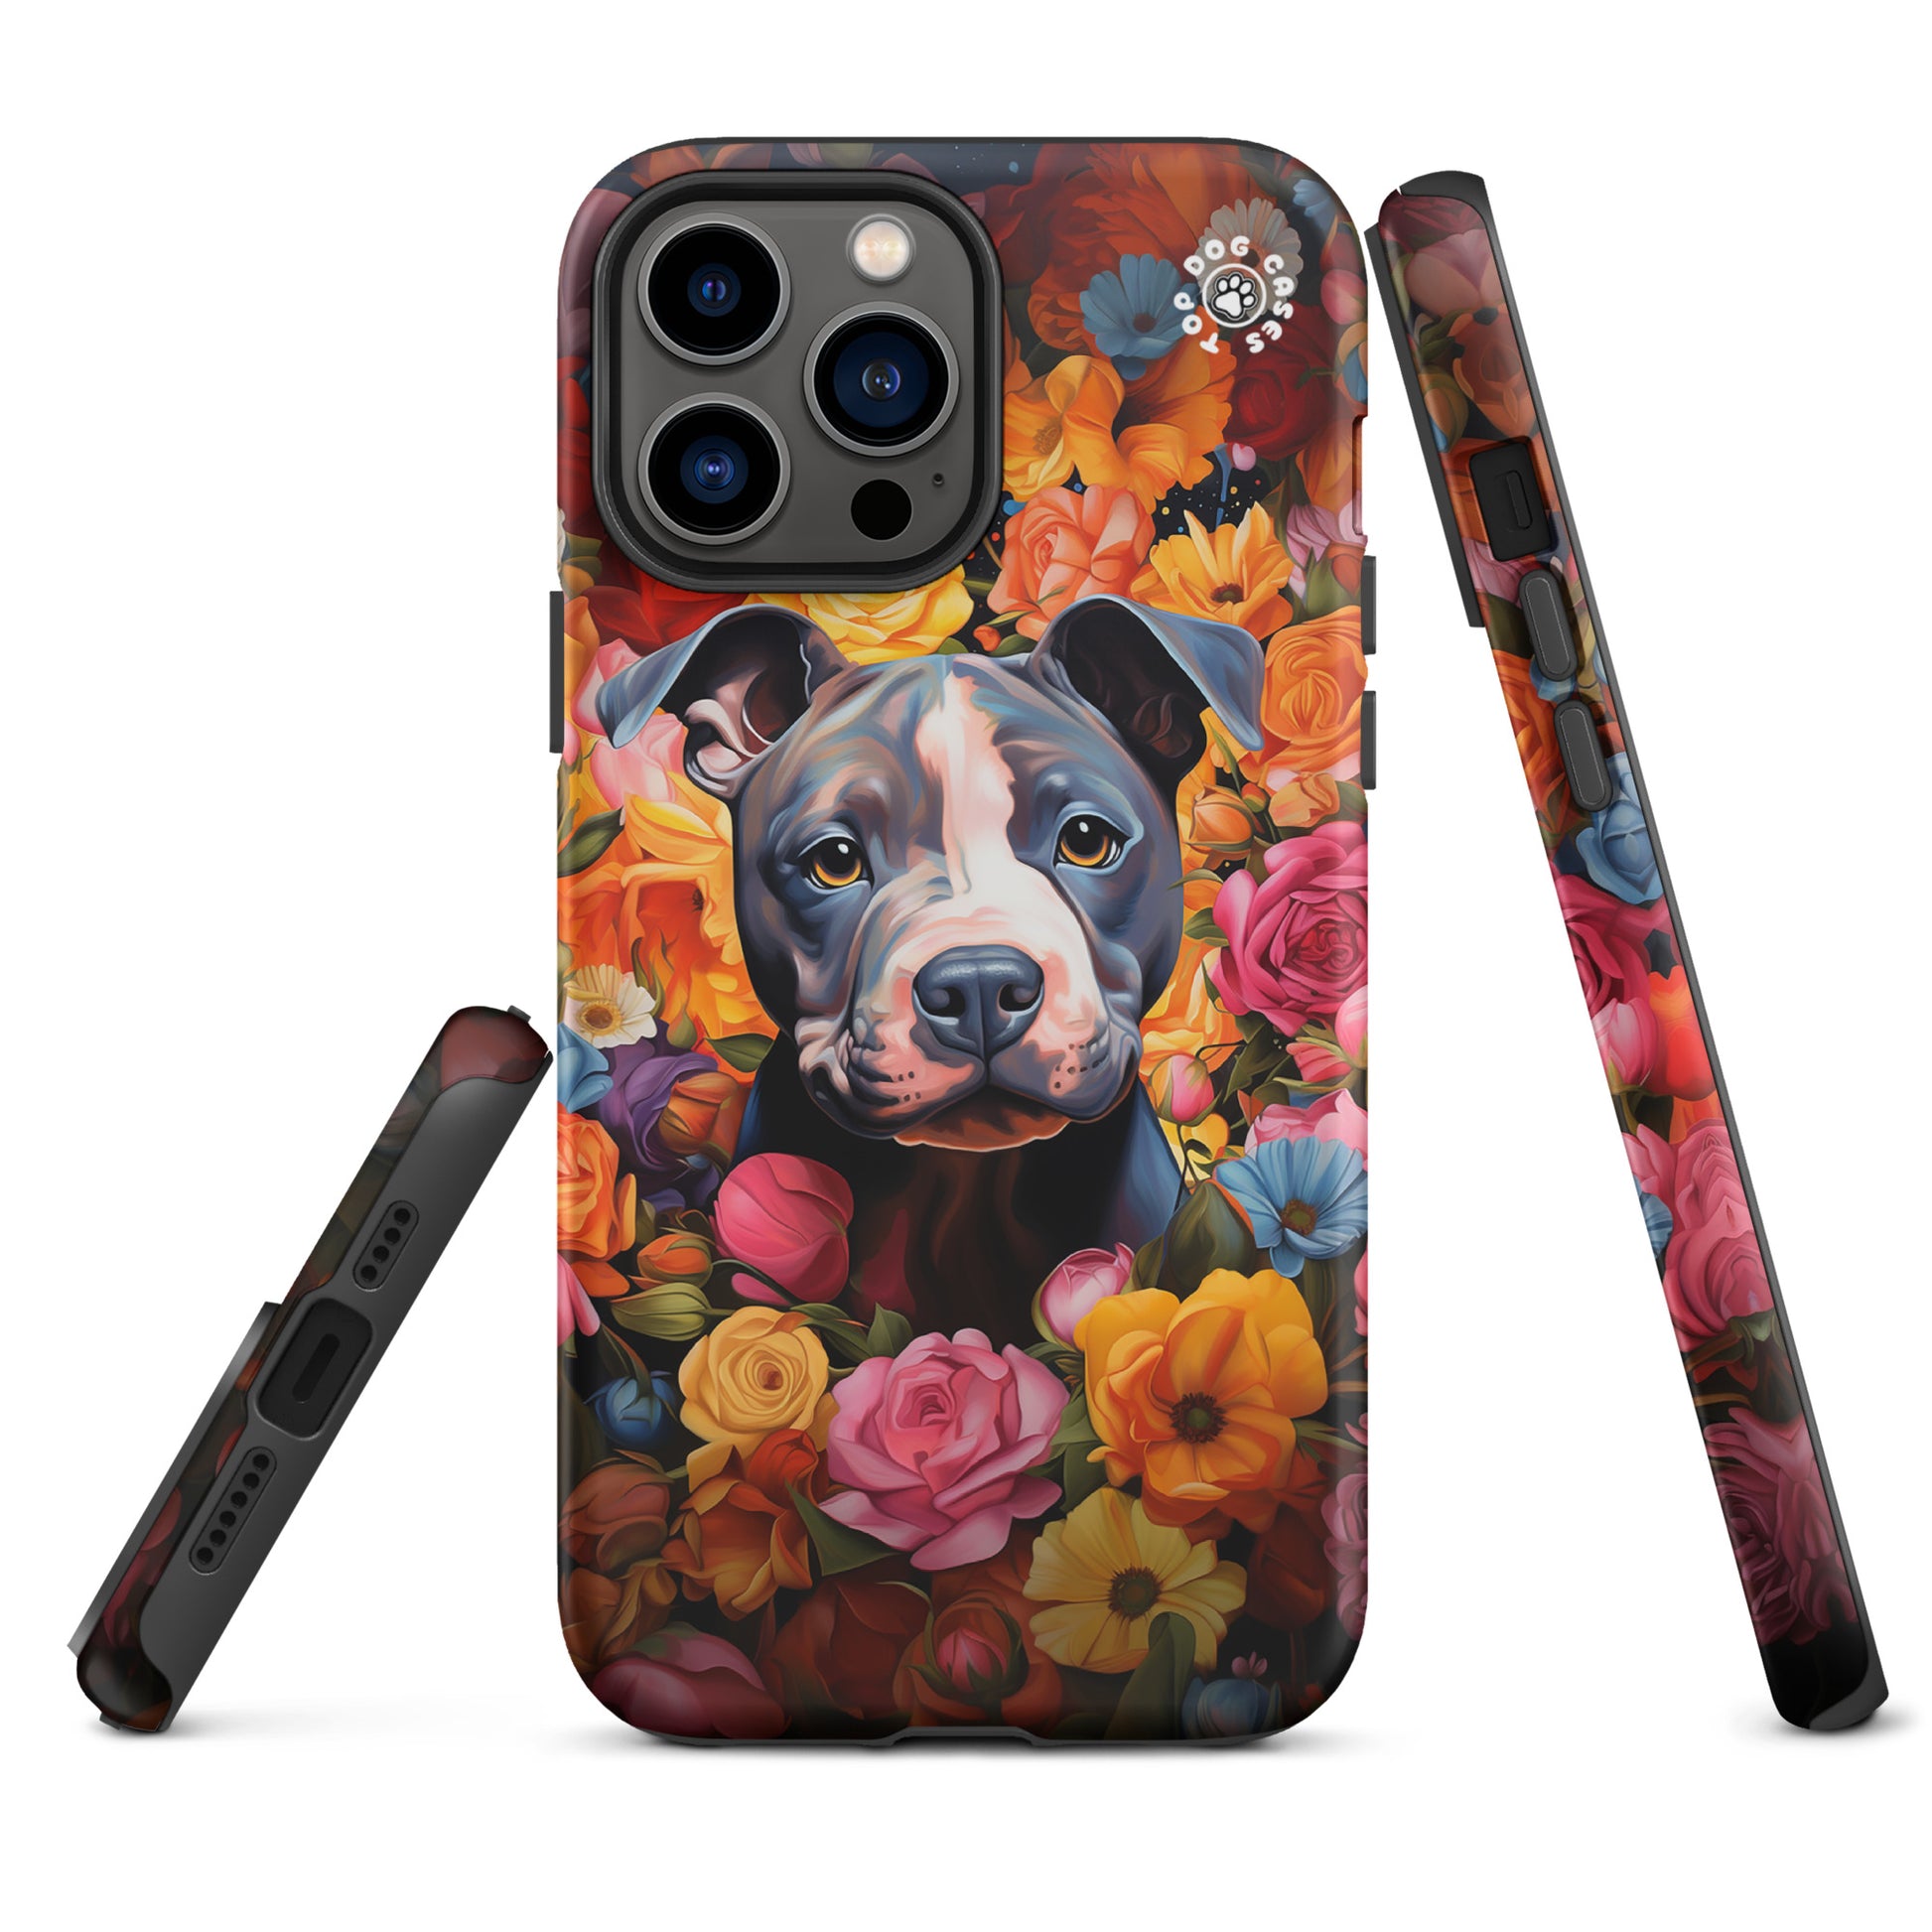 Pitbull - iPhone 13 Case - Aesthetic Phone Cases - Top Dog Cases - #DogsAndFlowers, #iPhone, #iPhone13, #iPhone13case, #iPhone13DogCase, #iPhone13Mini, #iPhone13Pro, #iPhone13ProMax, #Pitbull